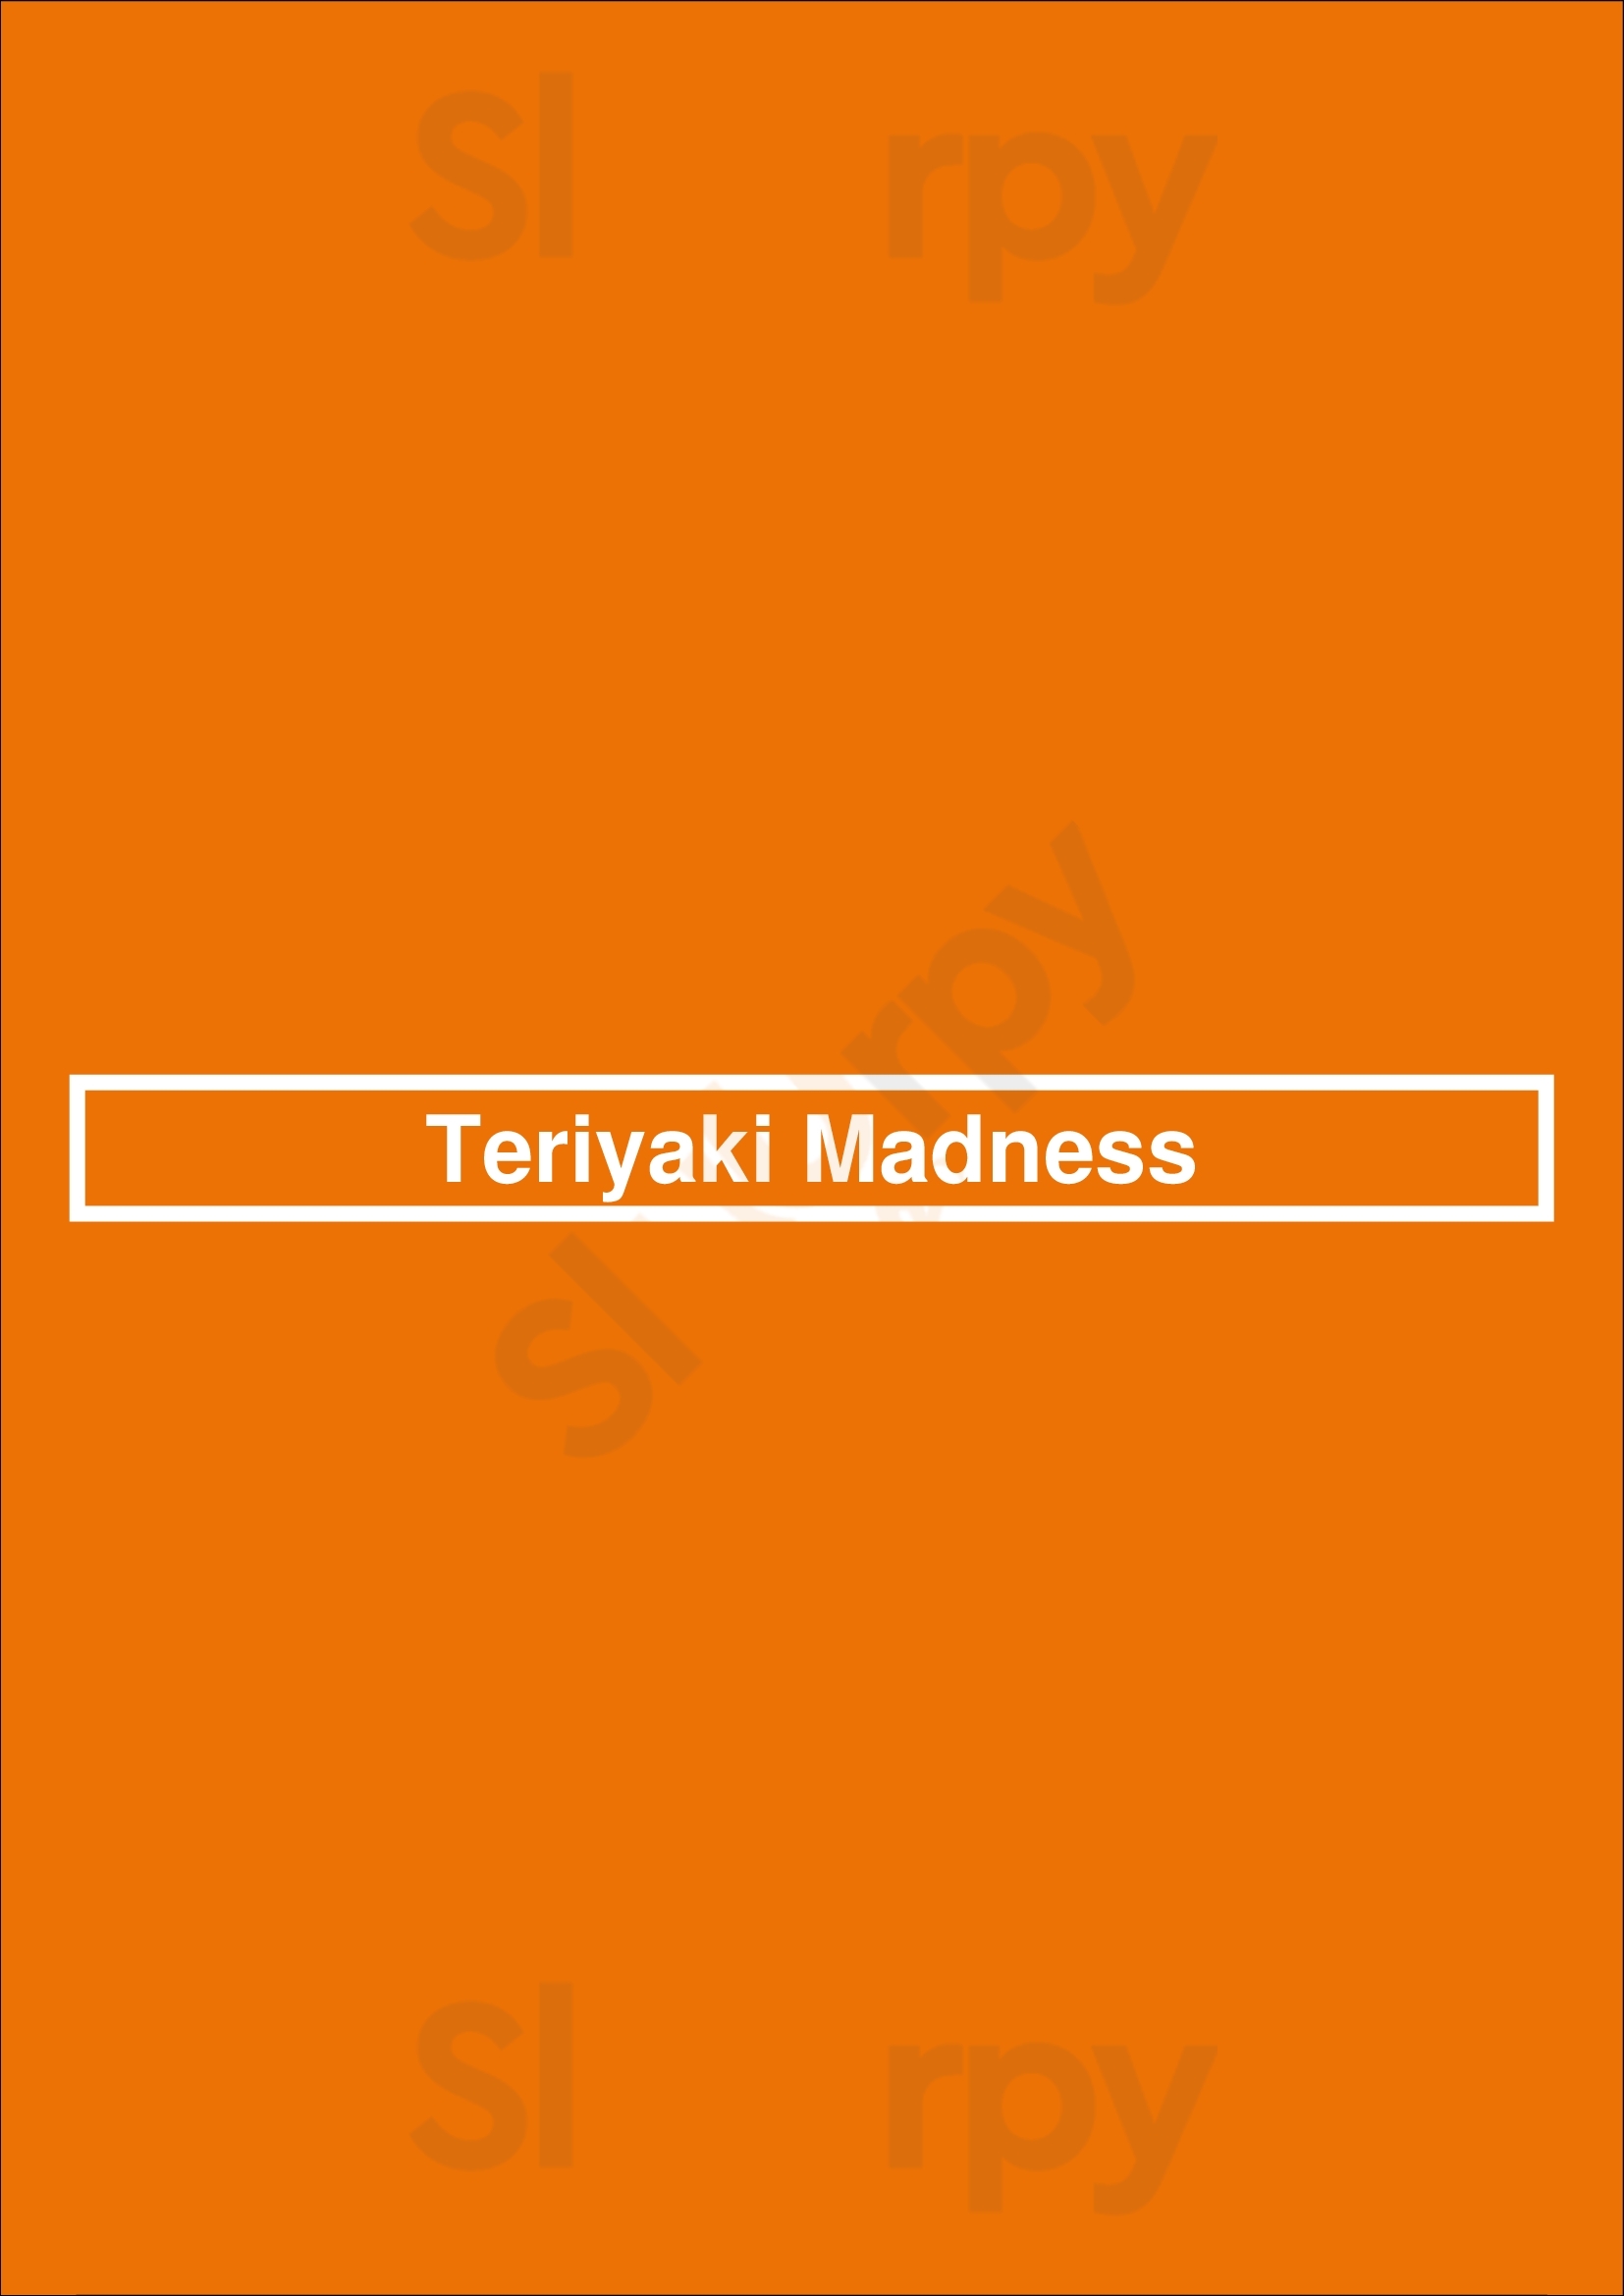 Teriyaki Madness Reno Menu - 1